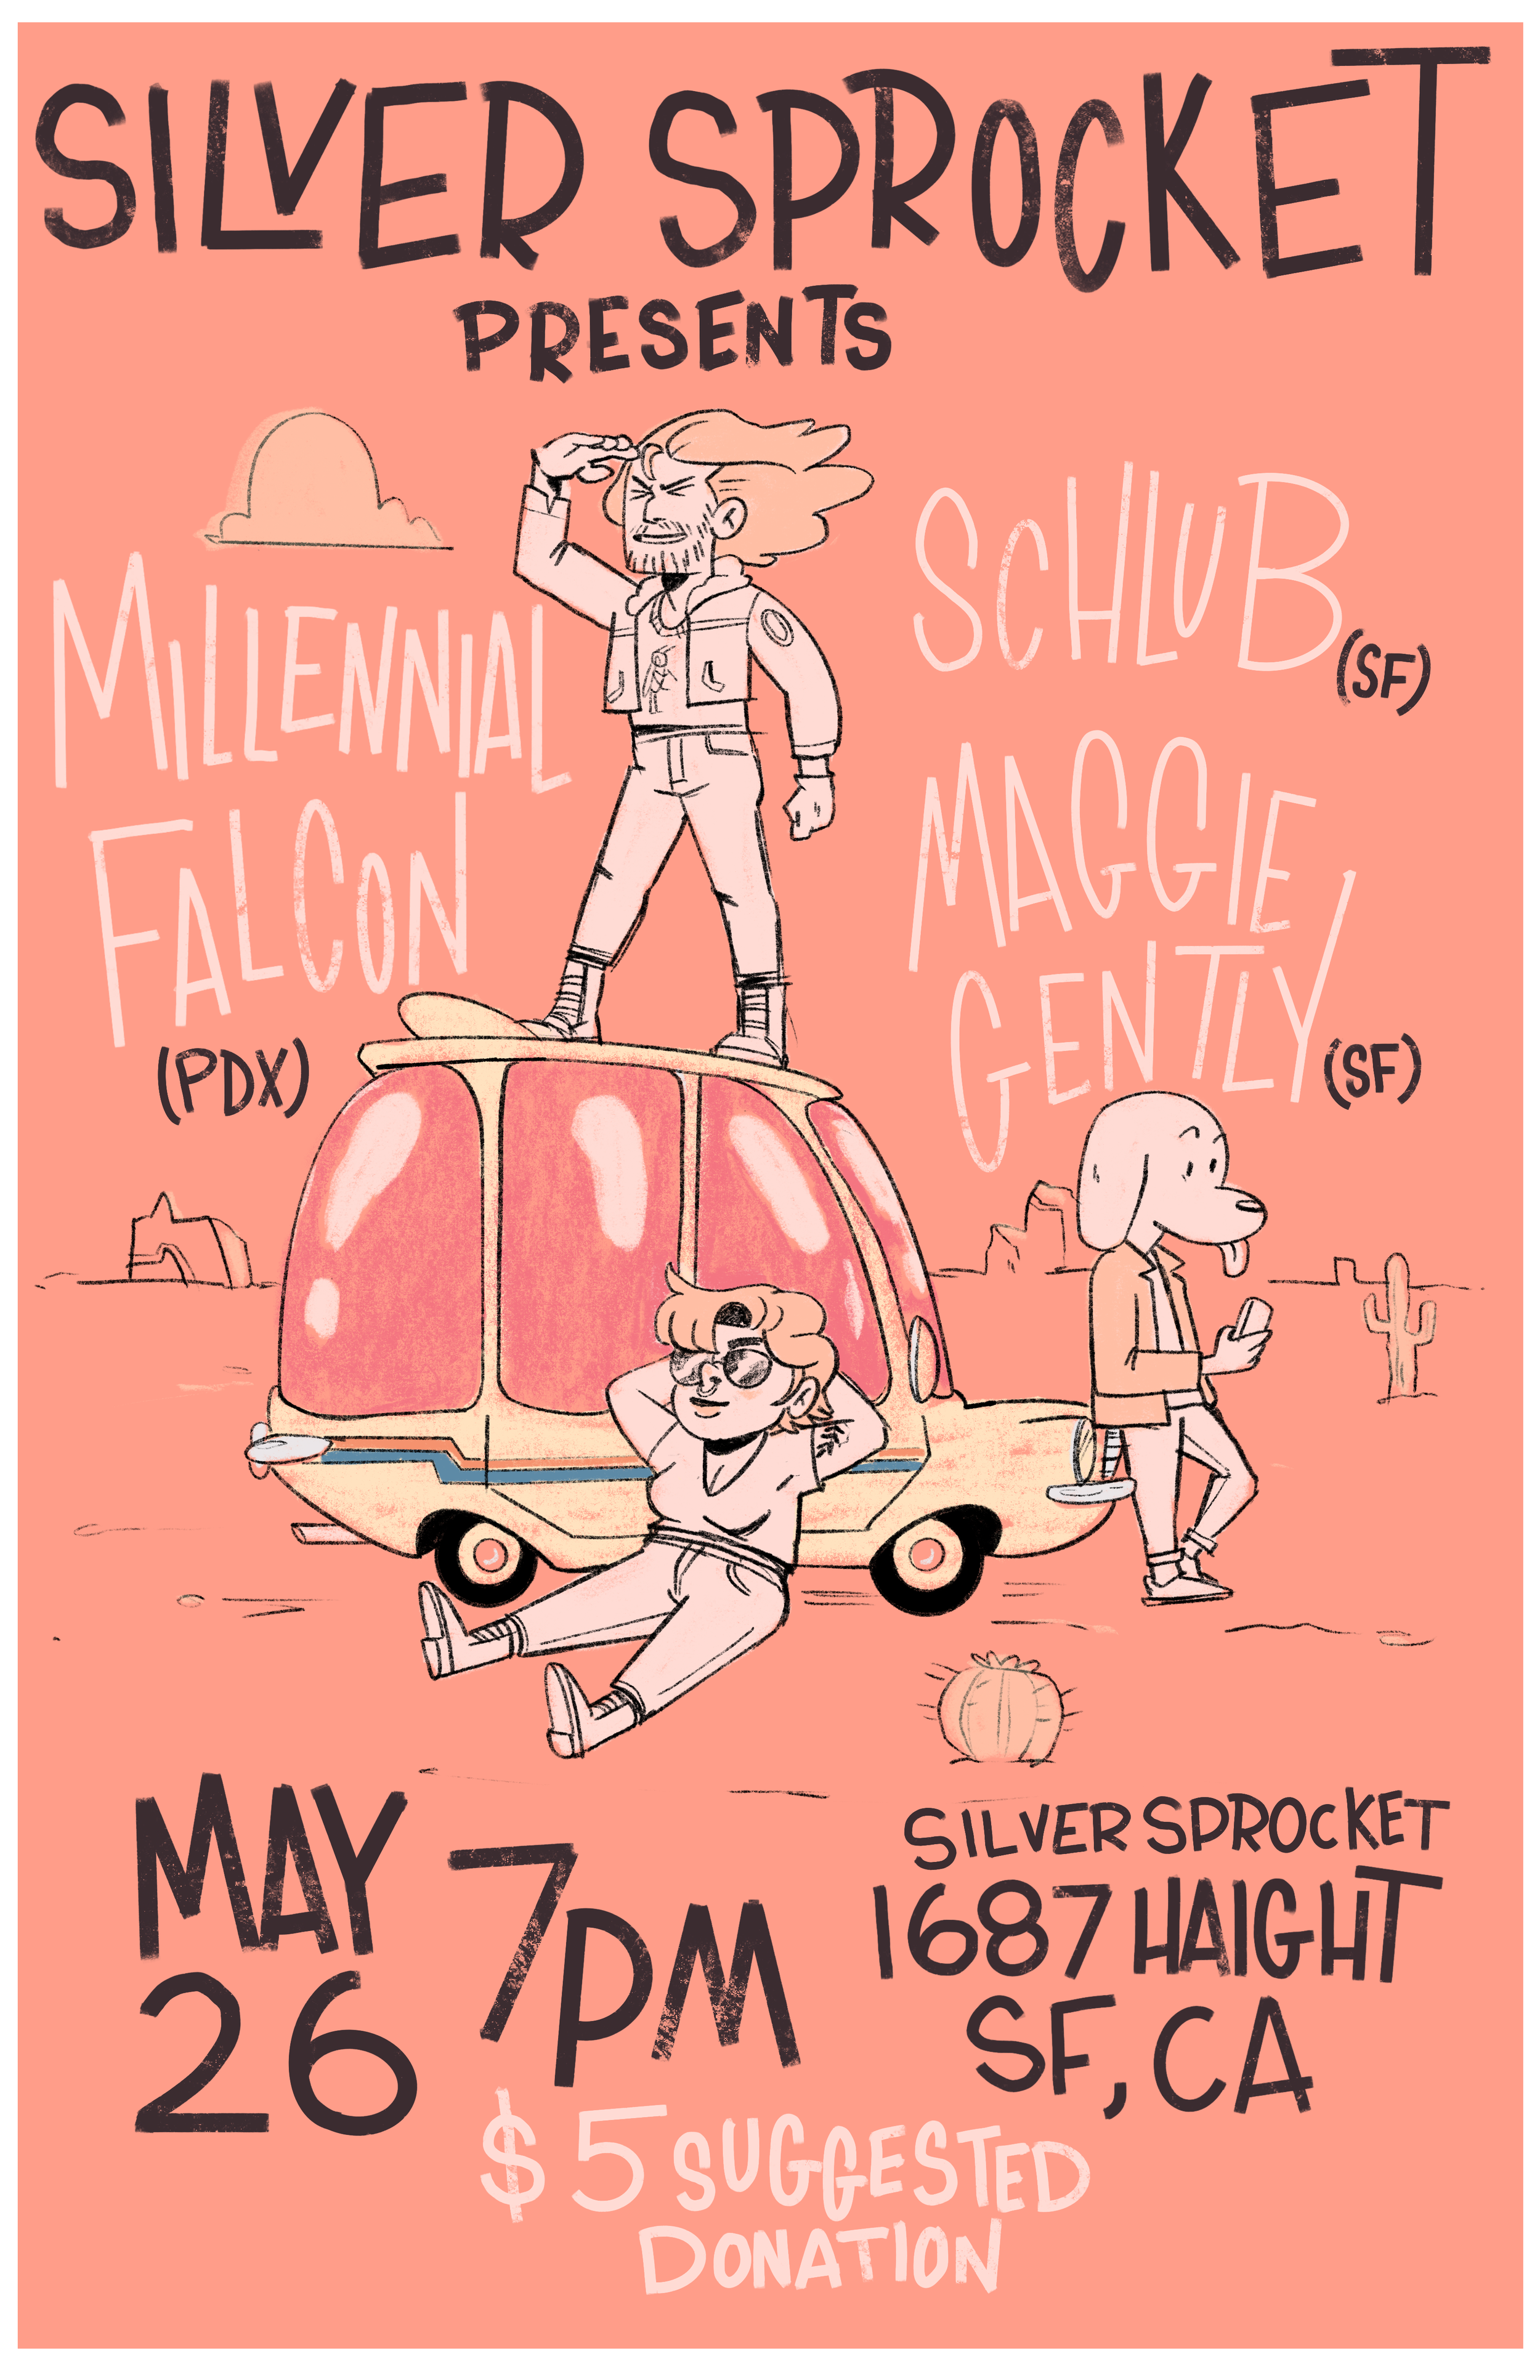 Millennial Falcon/Maggie Gently/Schlub Show Poster 5/26/2019